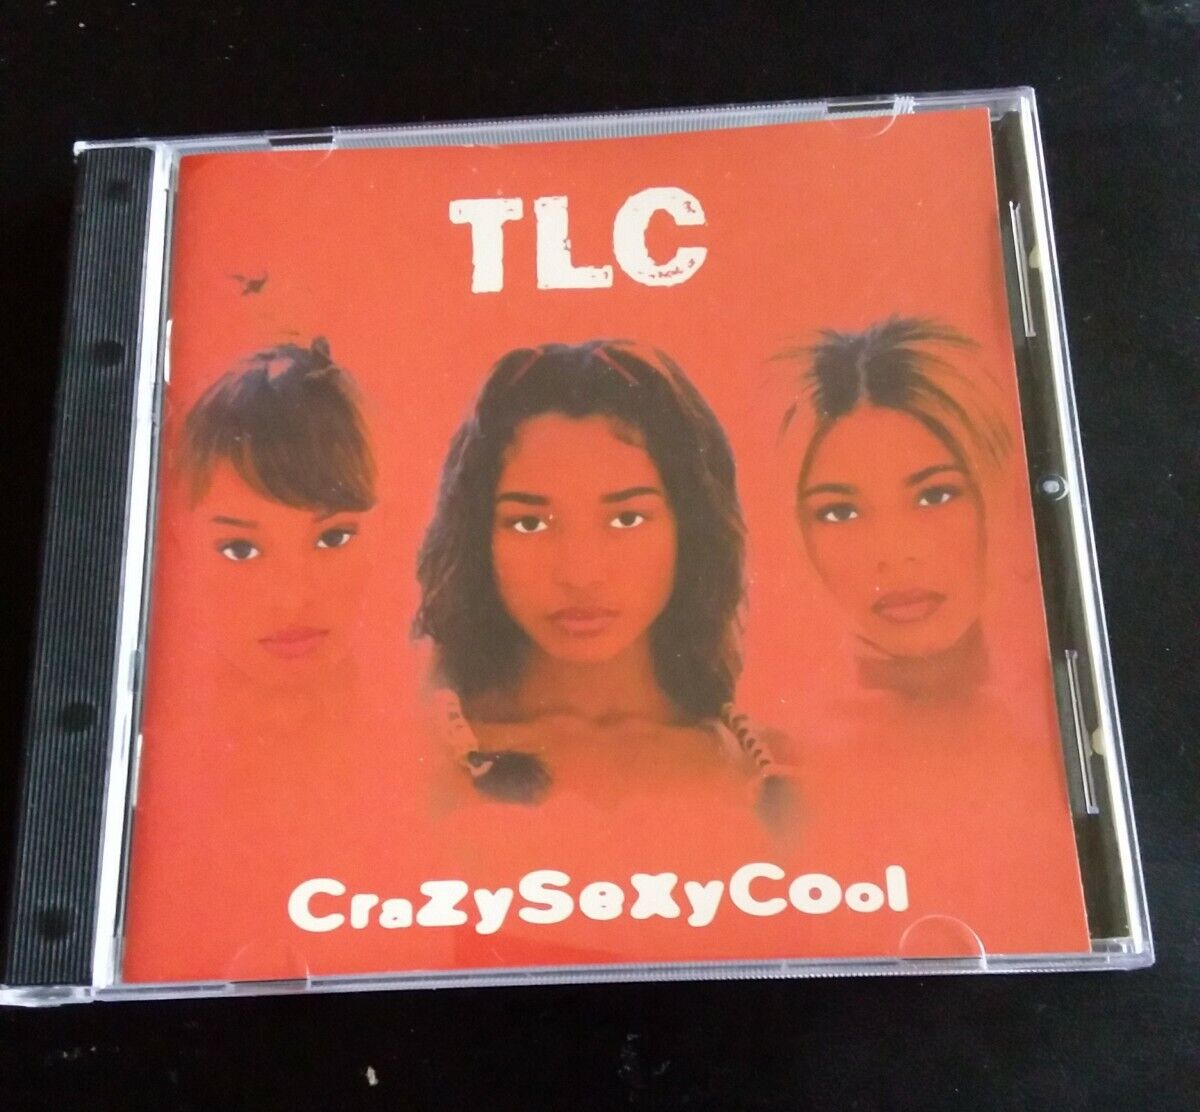 Crazysexycool by Tlc (CD, 1994)